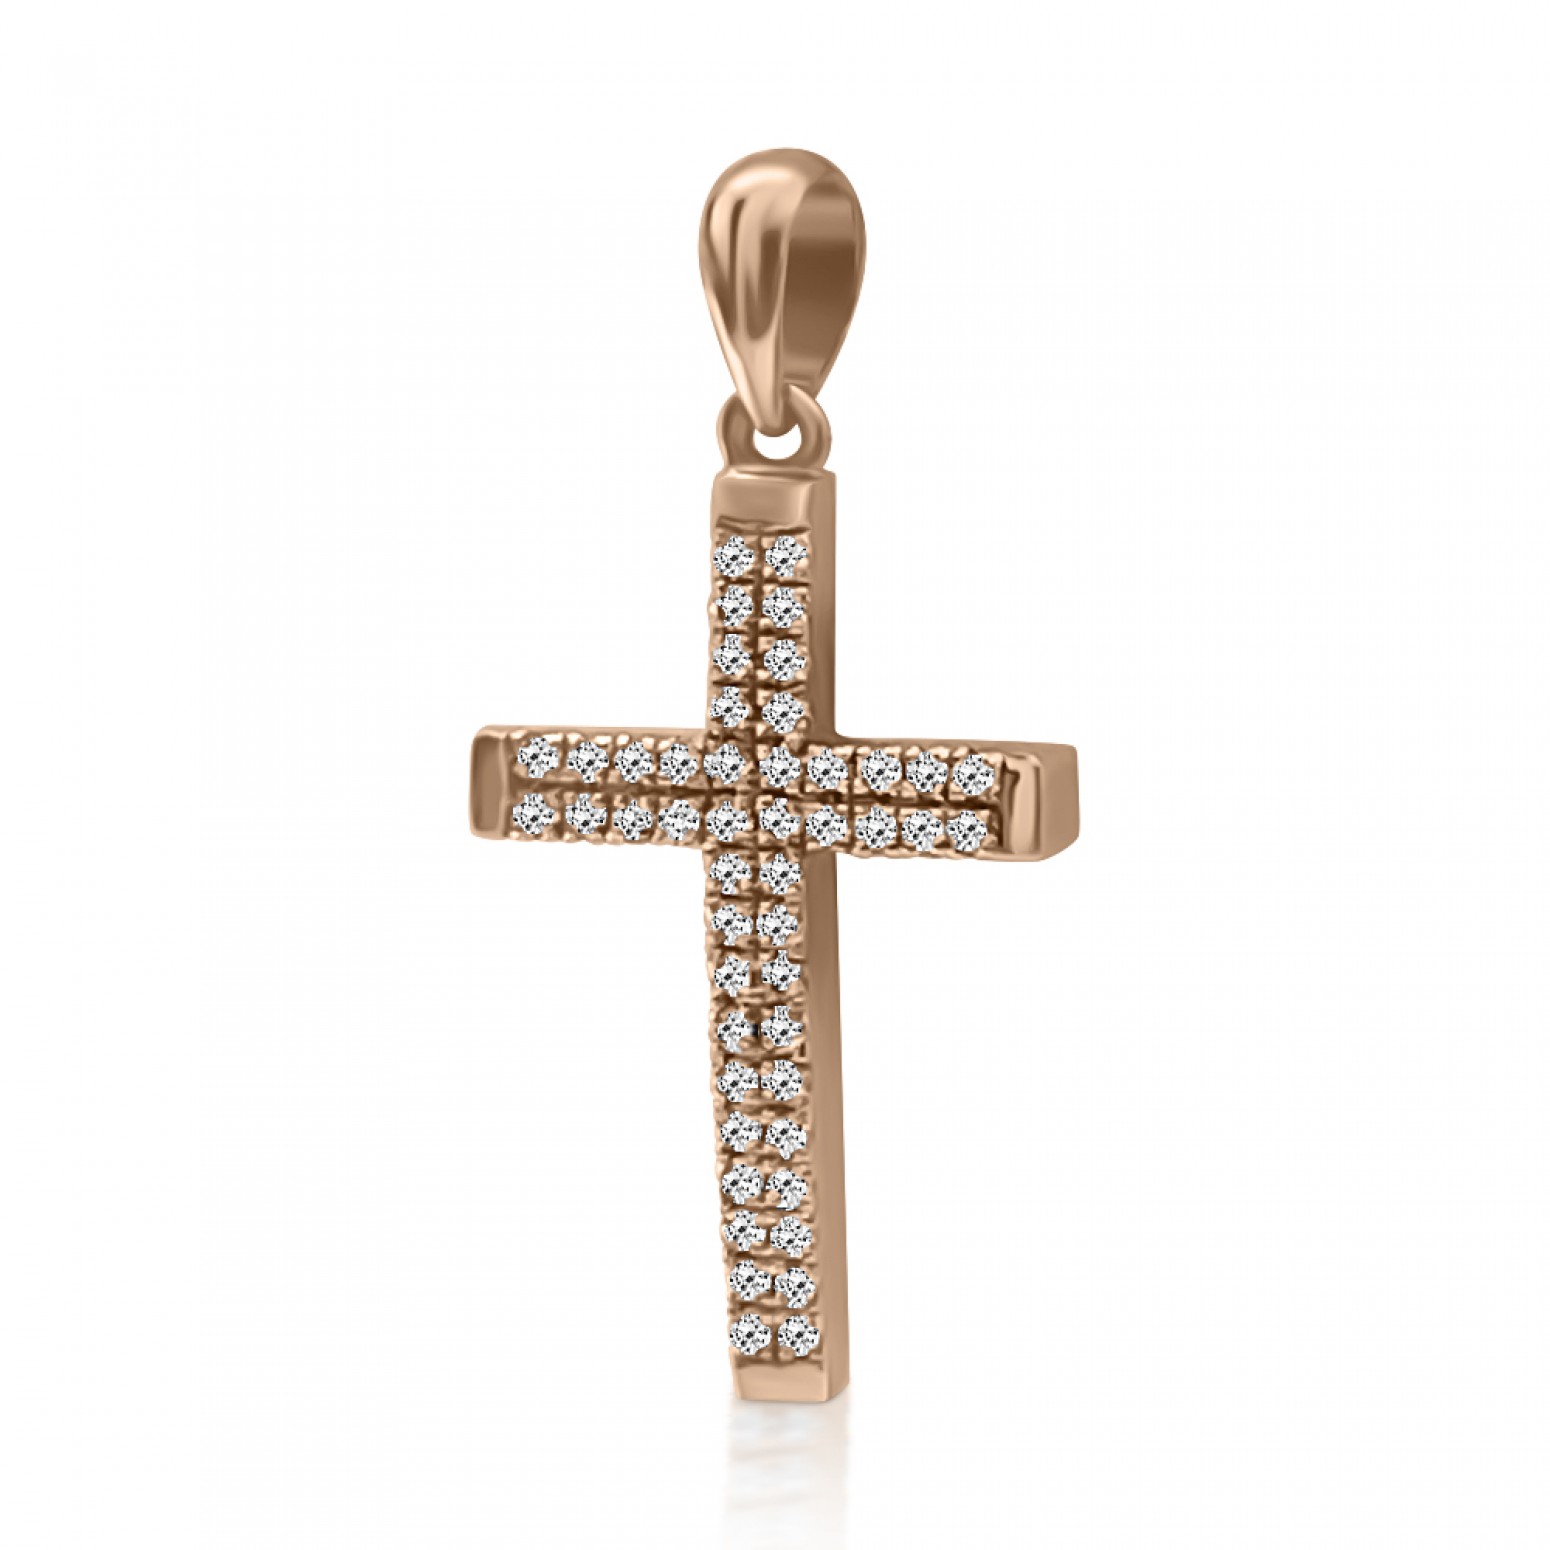 Baptism cross K18 pink gold with diamonds 0.17ct, VS1, H st3866 CROSSES Κοσμηματα - chrilia.gr